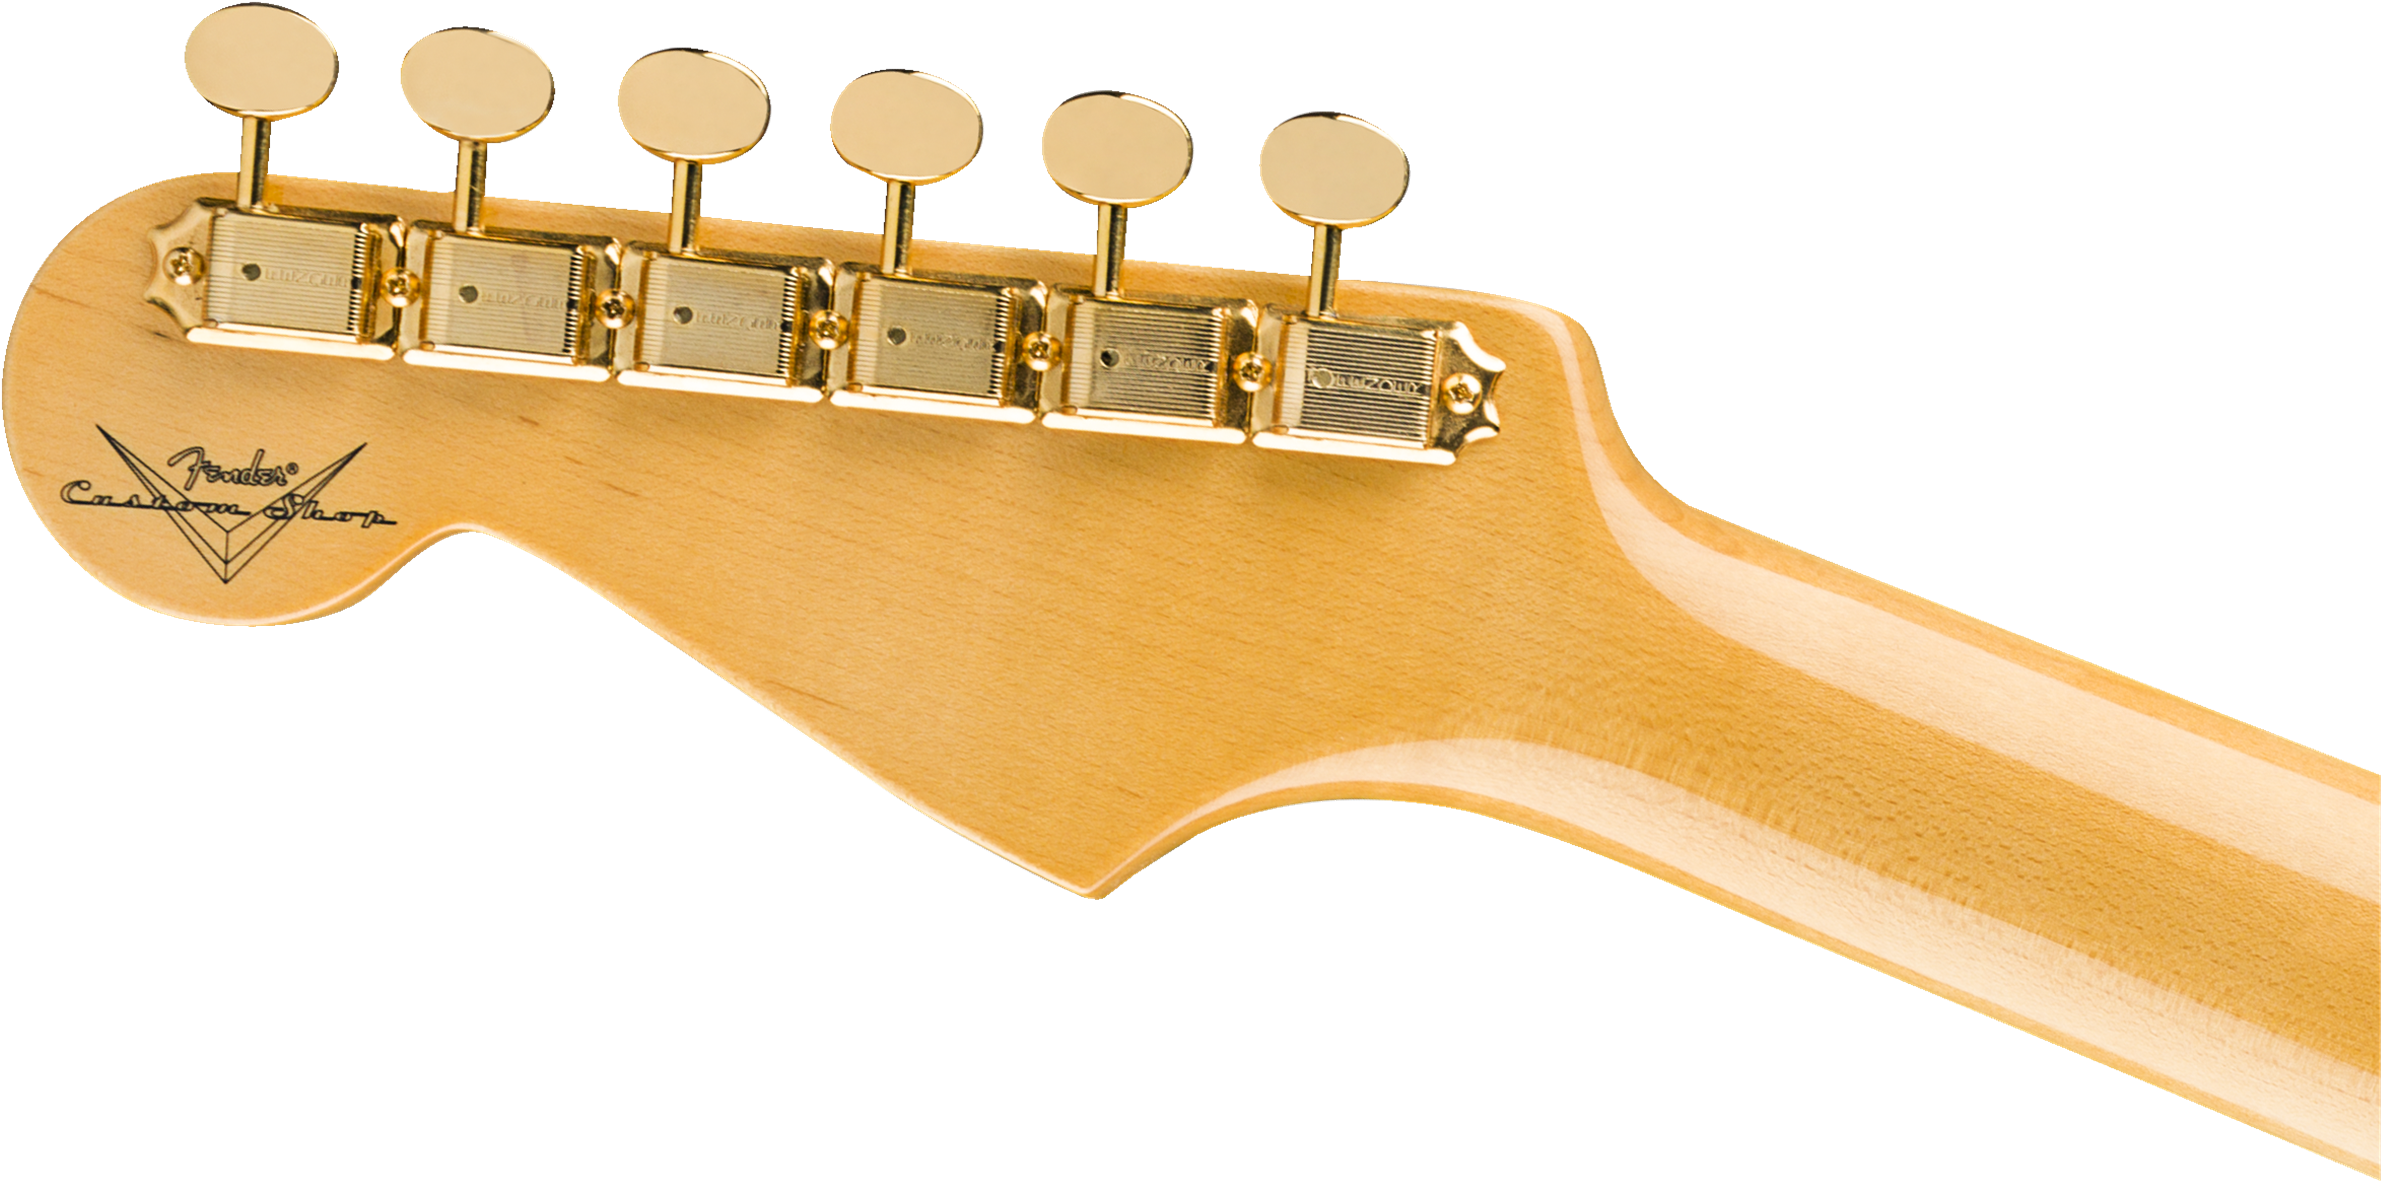 Fender Custom Shop Stevie Ray Vaughan Signature Stratocaster Rosewood Fingerboard 3-Color Sunburst f-9235000863 SERIAL NUMBER CZ545471 - 7.8 LBS